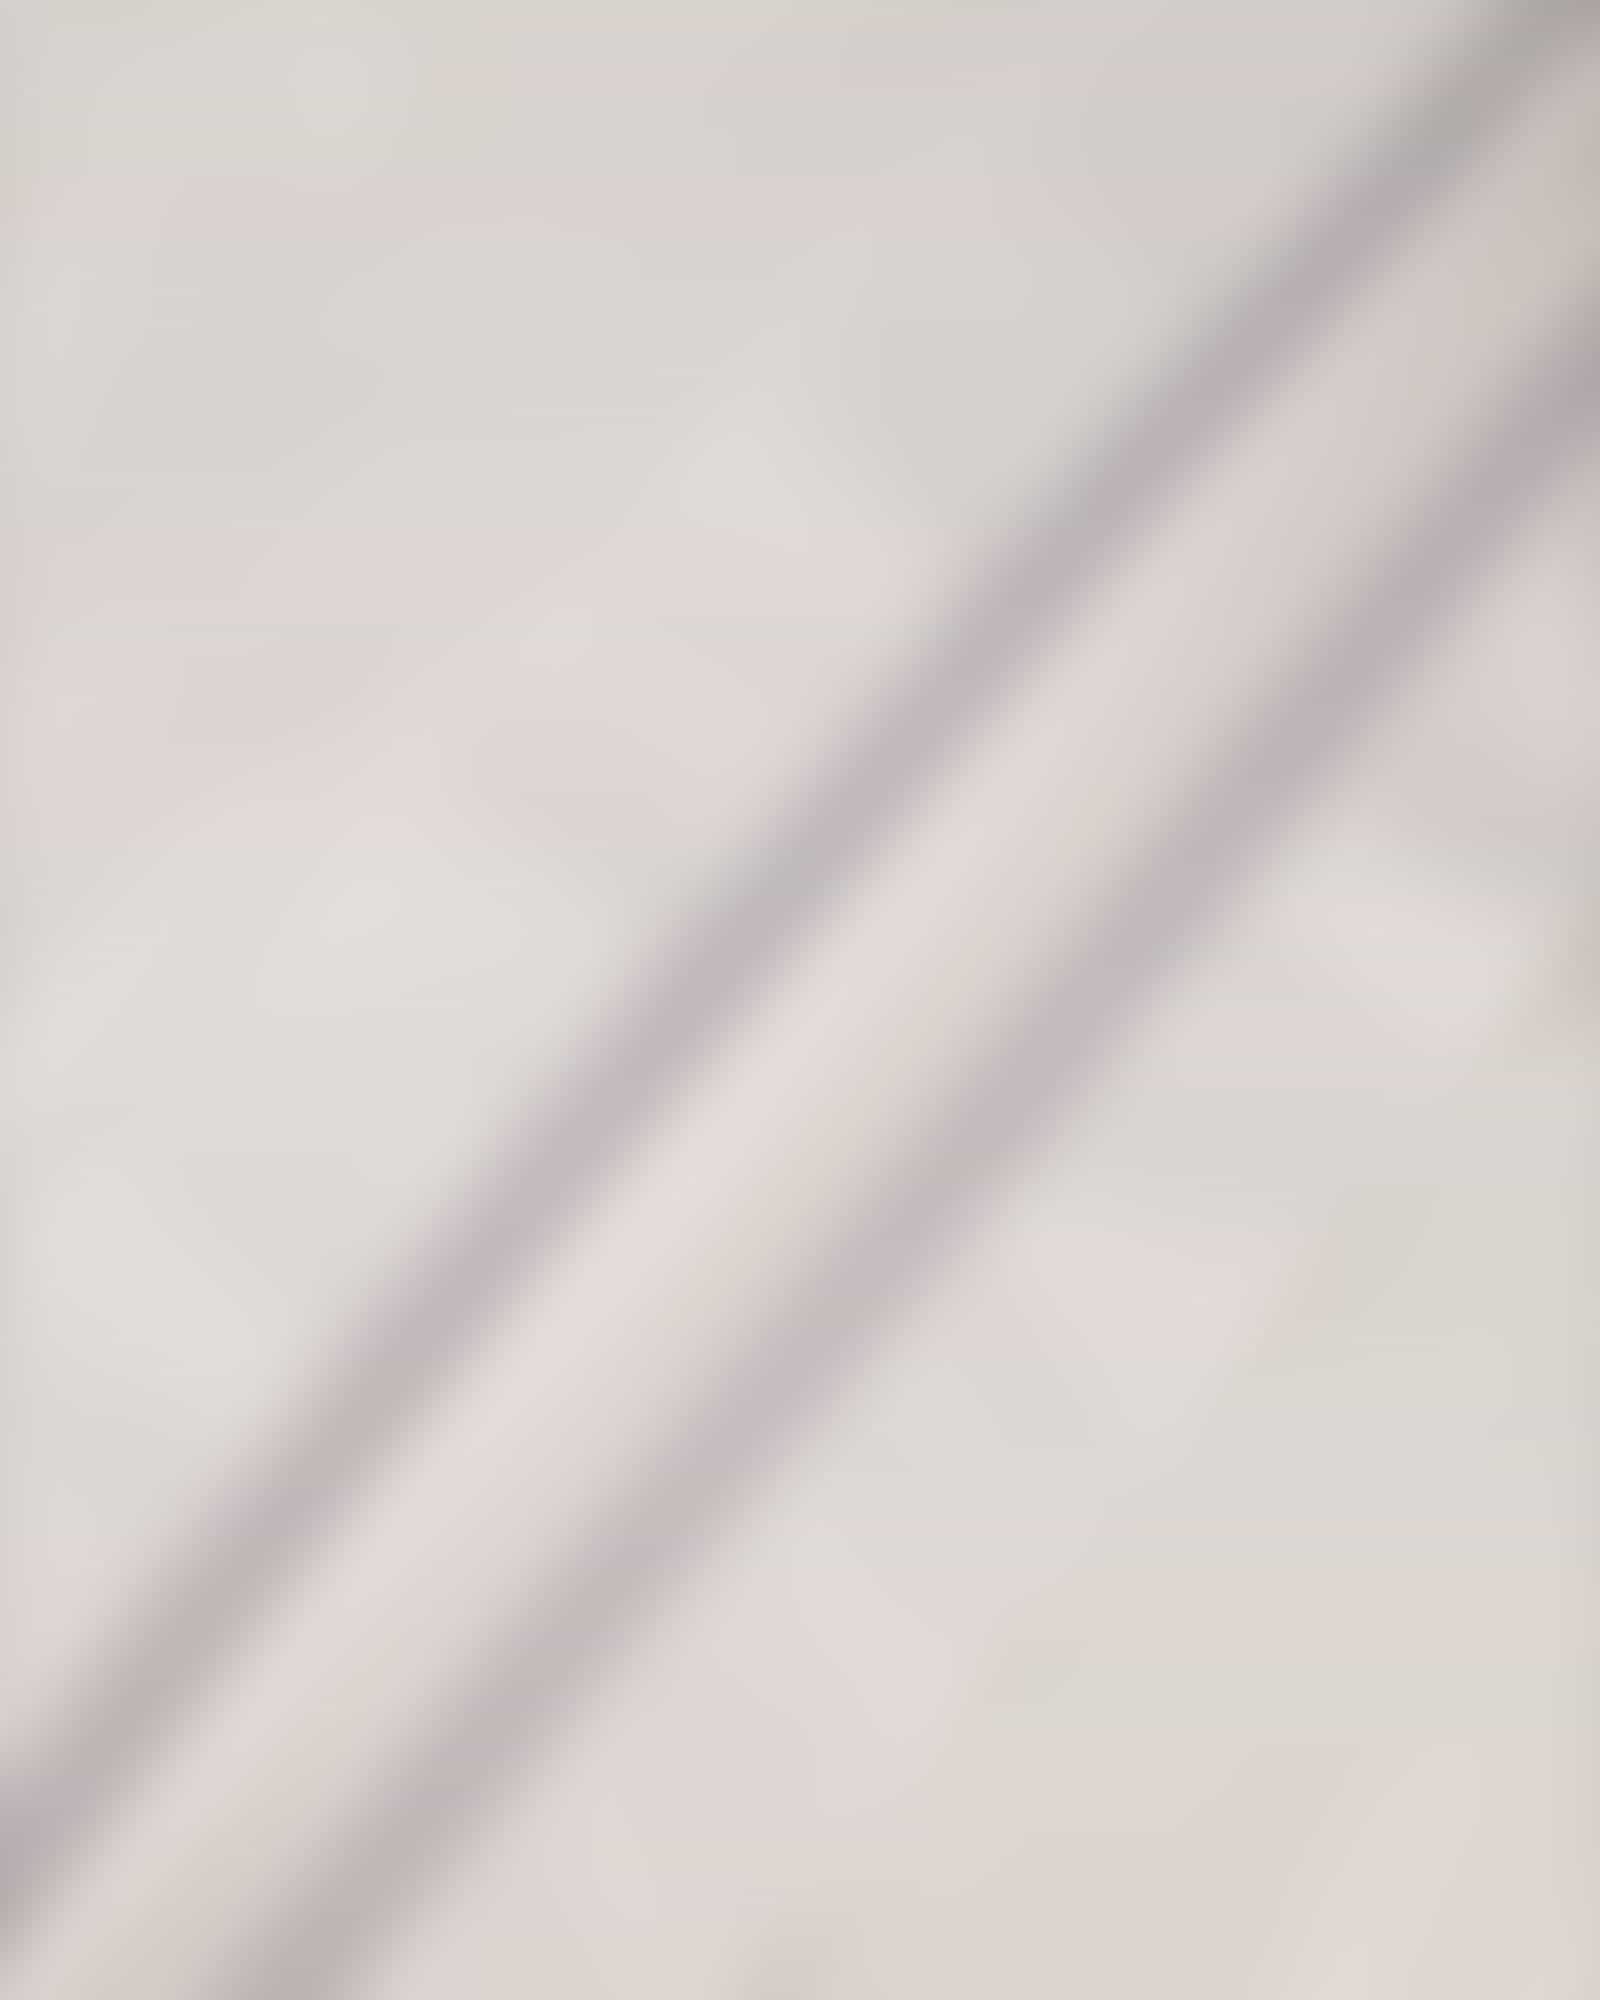 JOOP Herren Bademantel Kimono Pique 1656 - Farbe: Weiß - 600 - S Detailbild 1